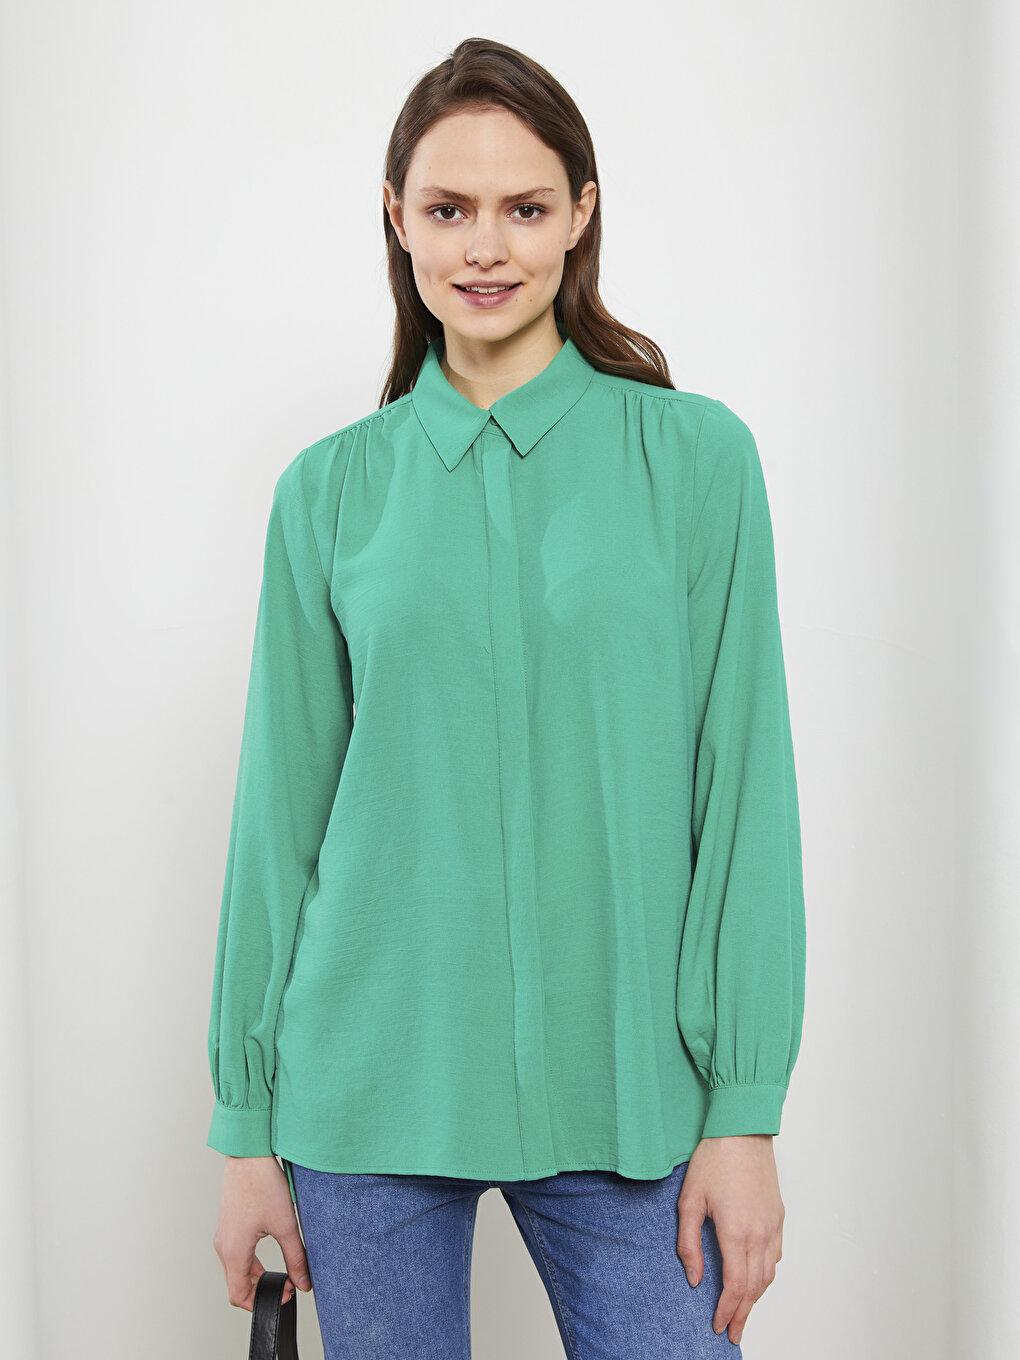 Plain Long Sleeve Women's Shirt Tunic -S2J885Z8-RX8 - S2J885Z8-RX8 - LC ...